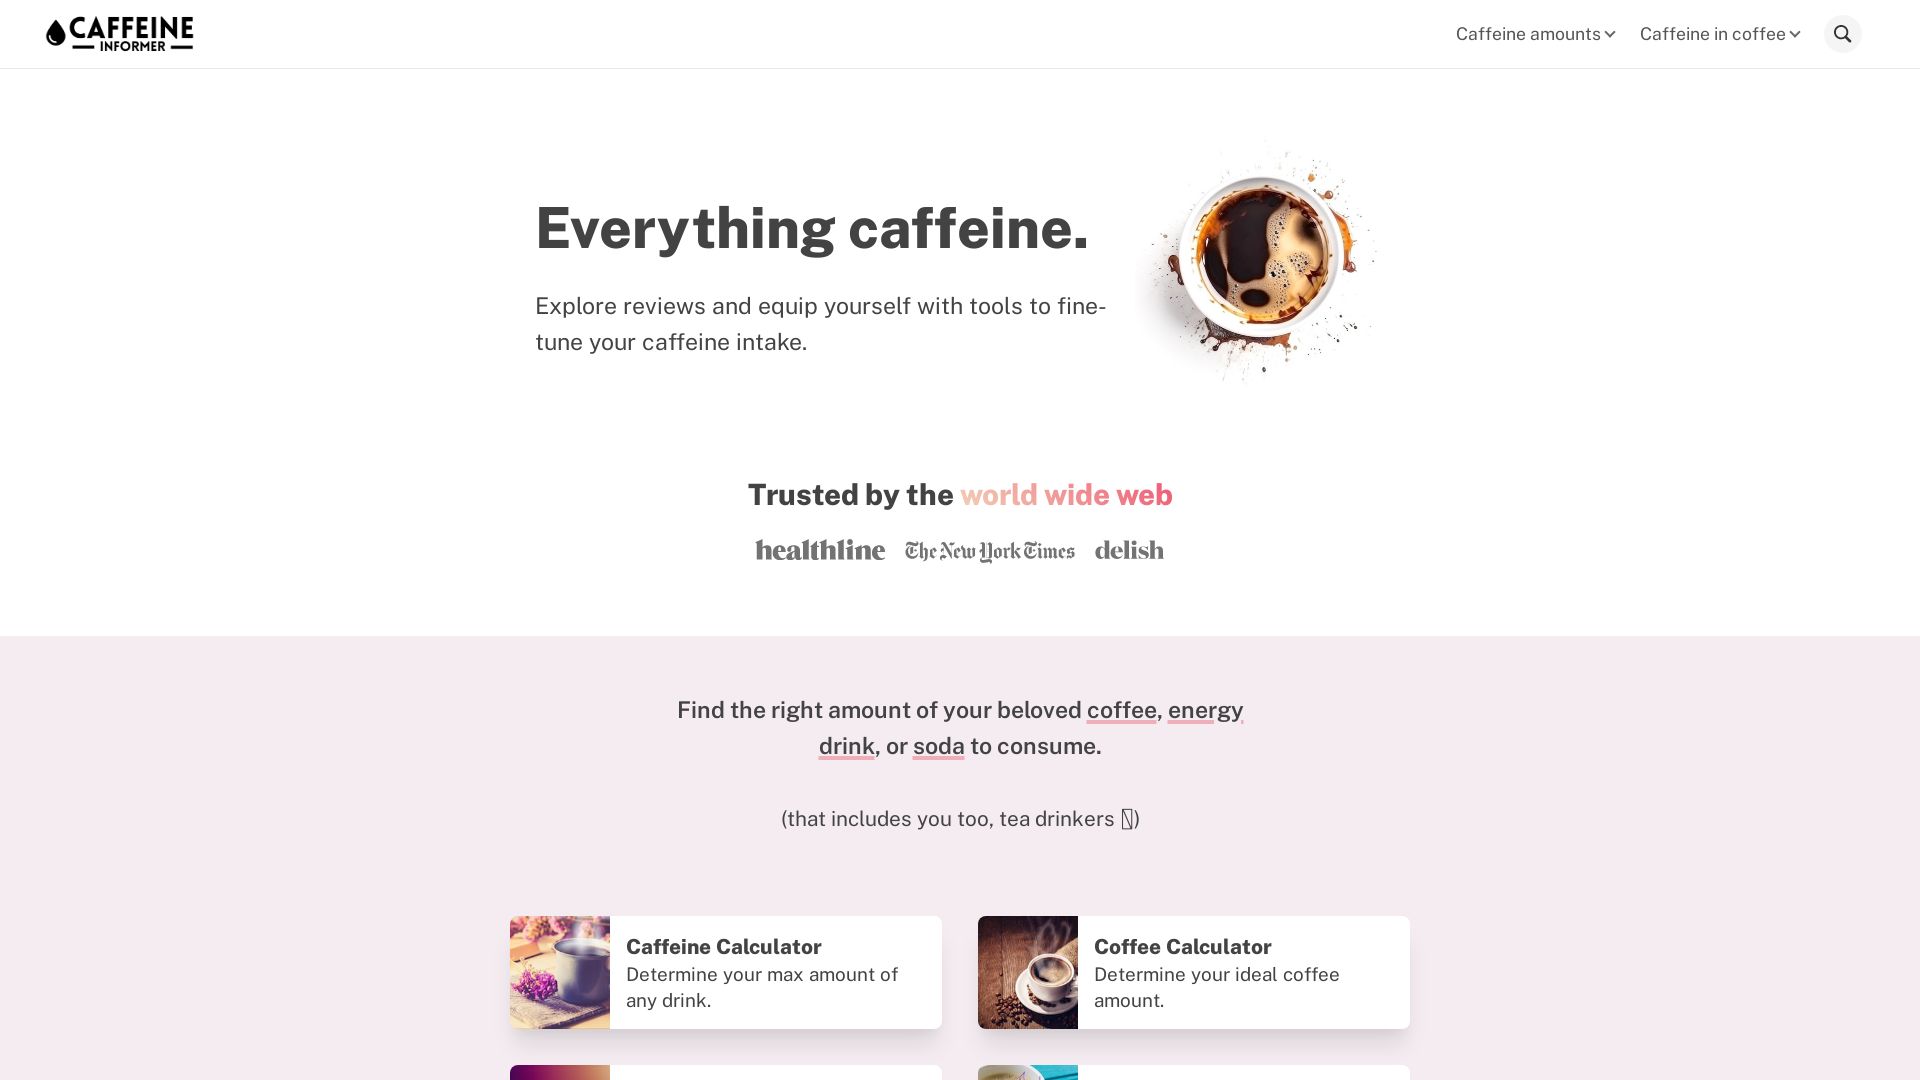 вебсайт caffeineinformer.com Є   ONLINE